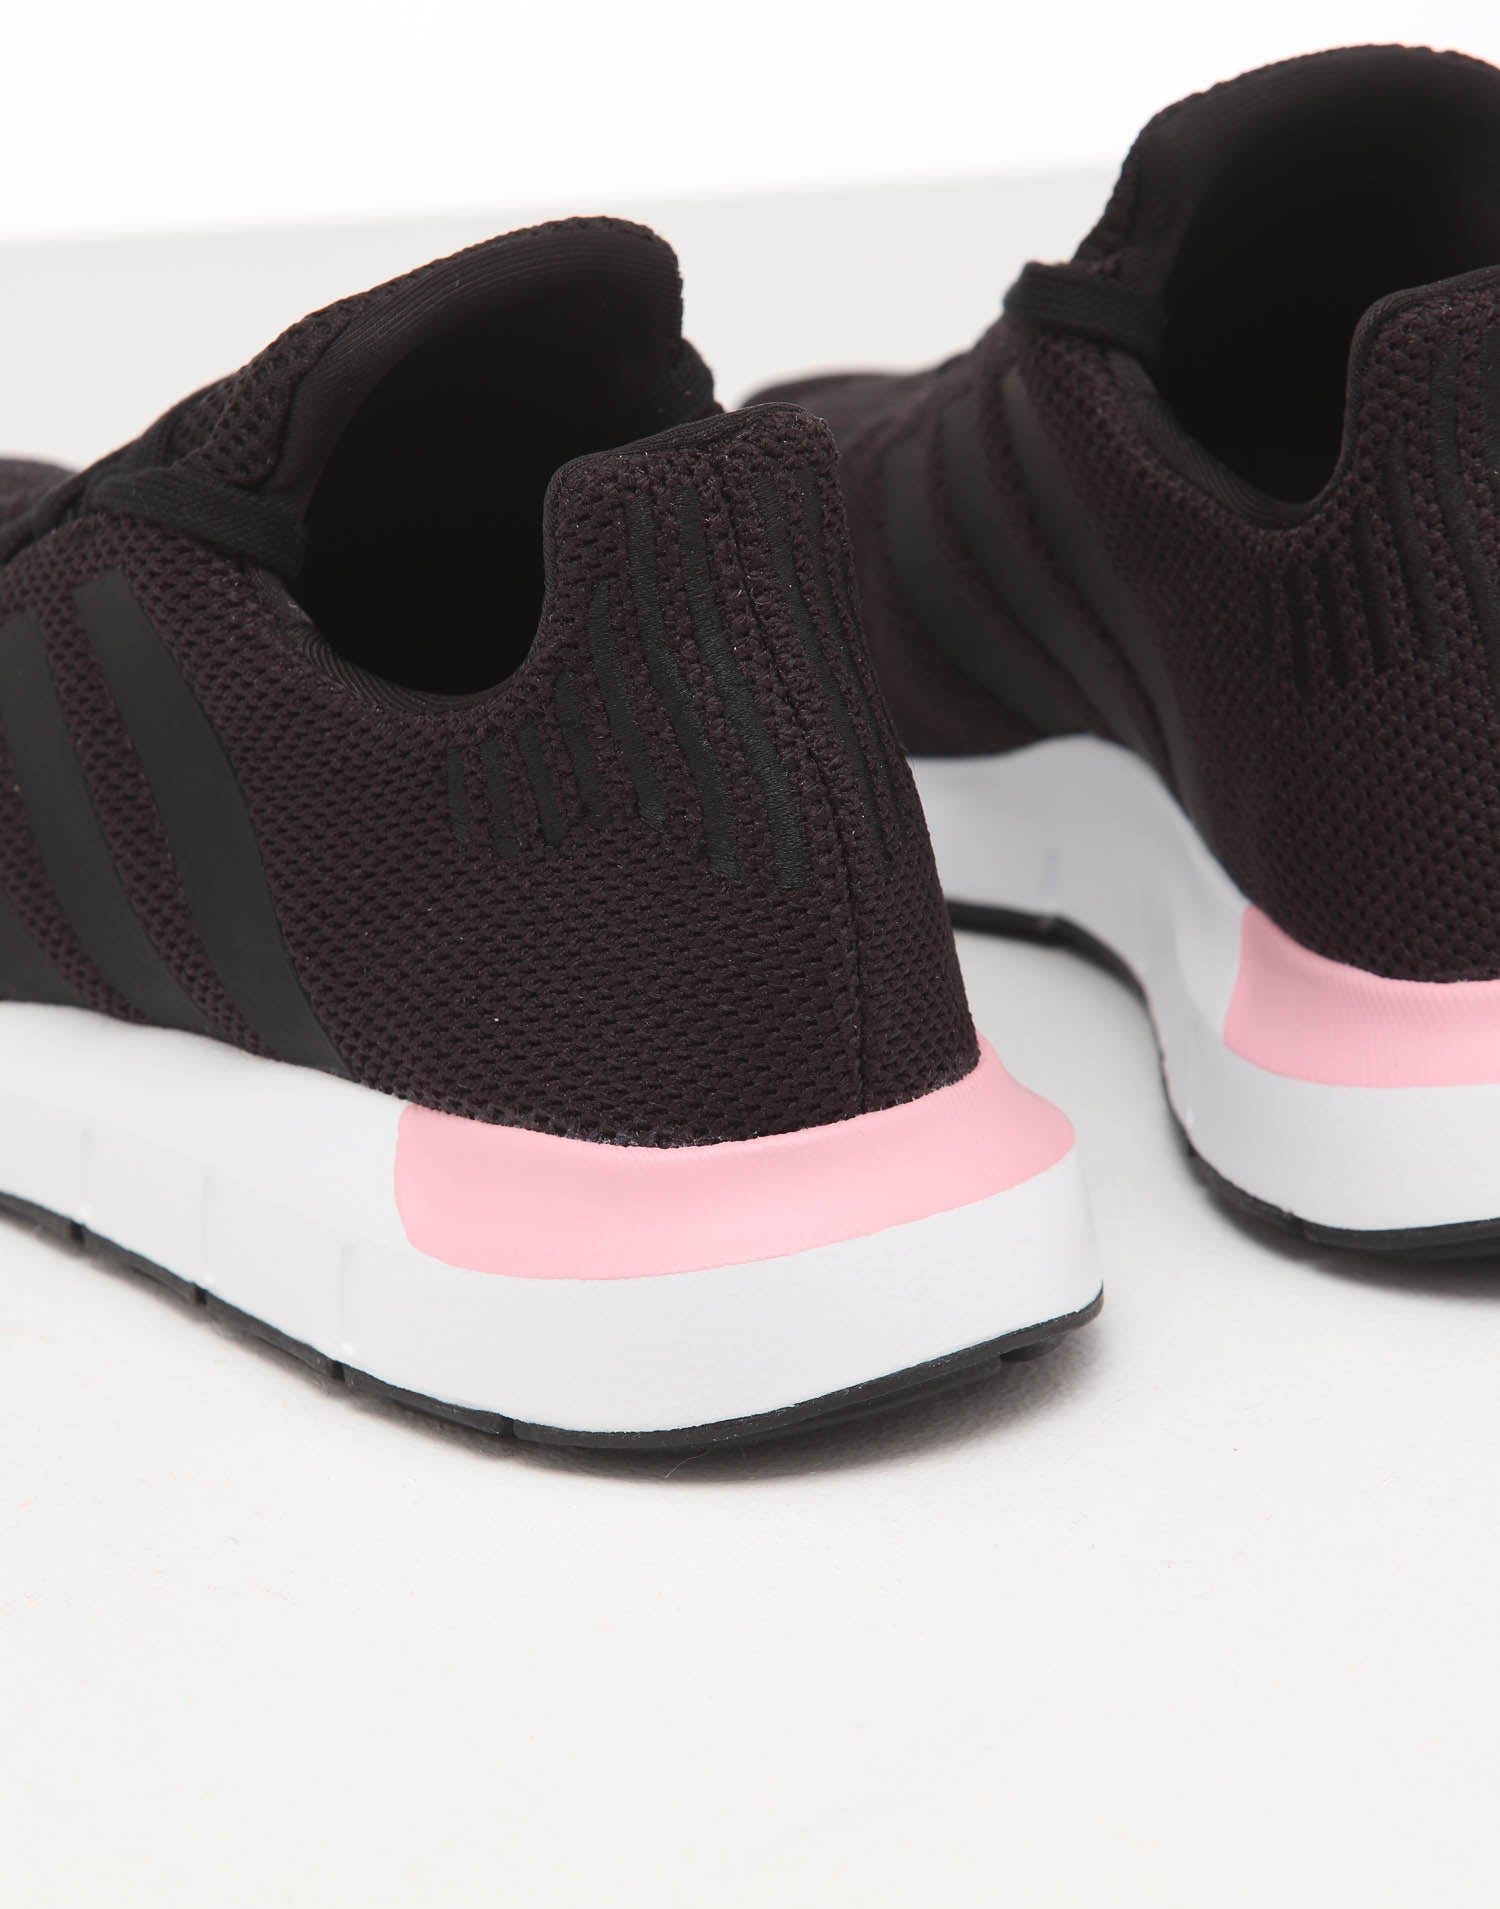 adidas swift run black and pink